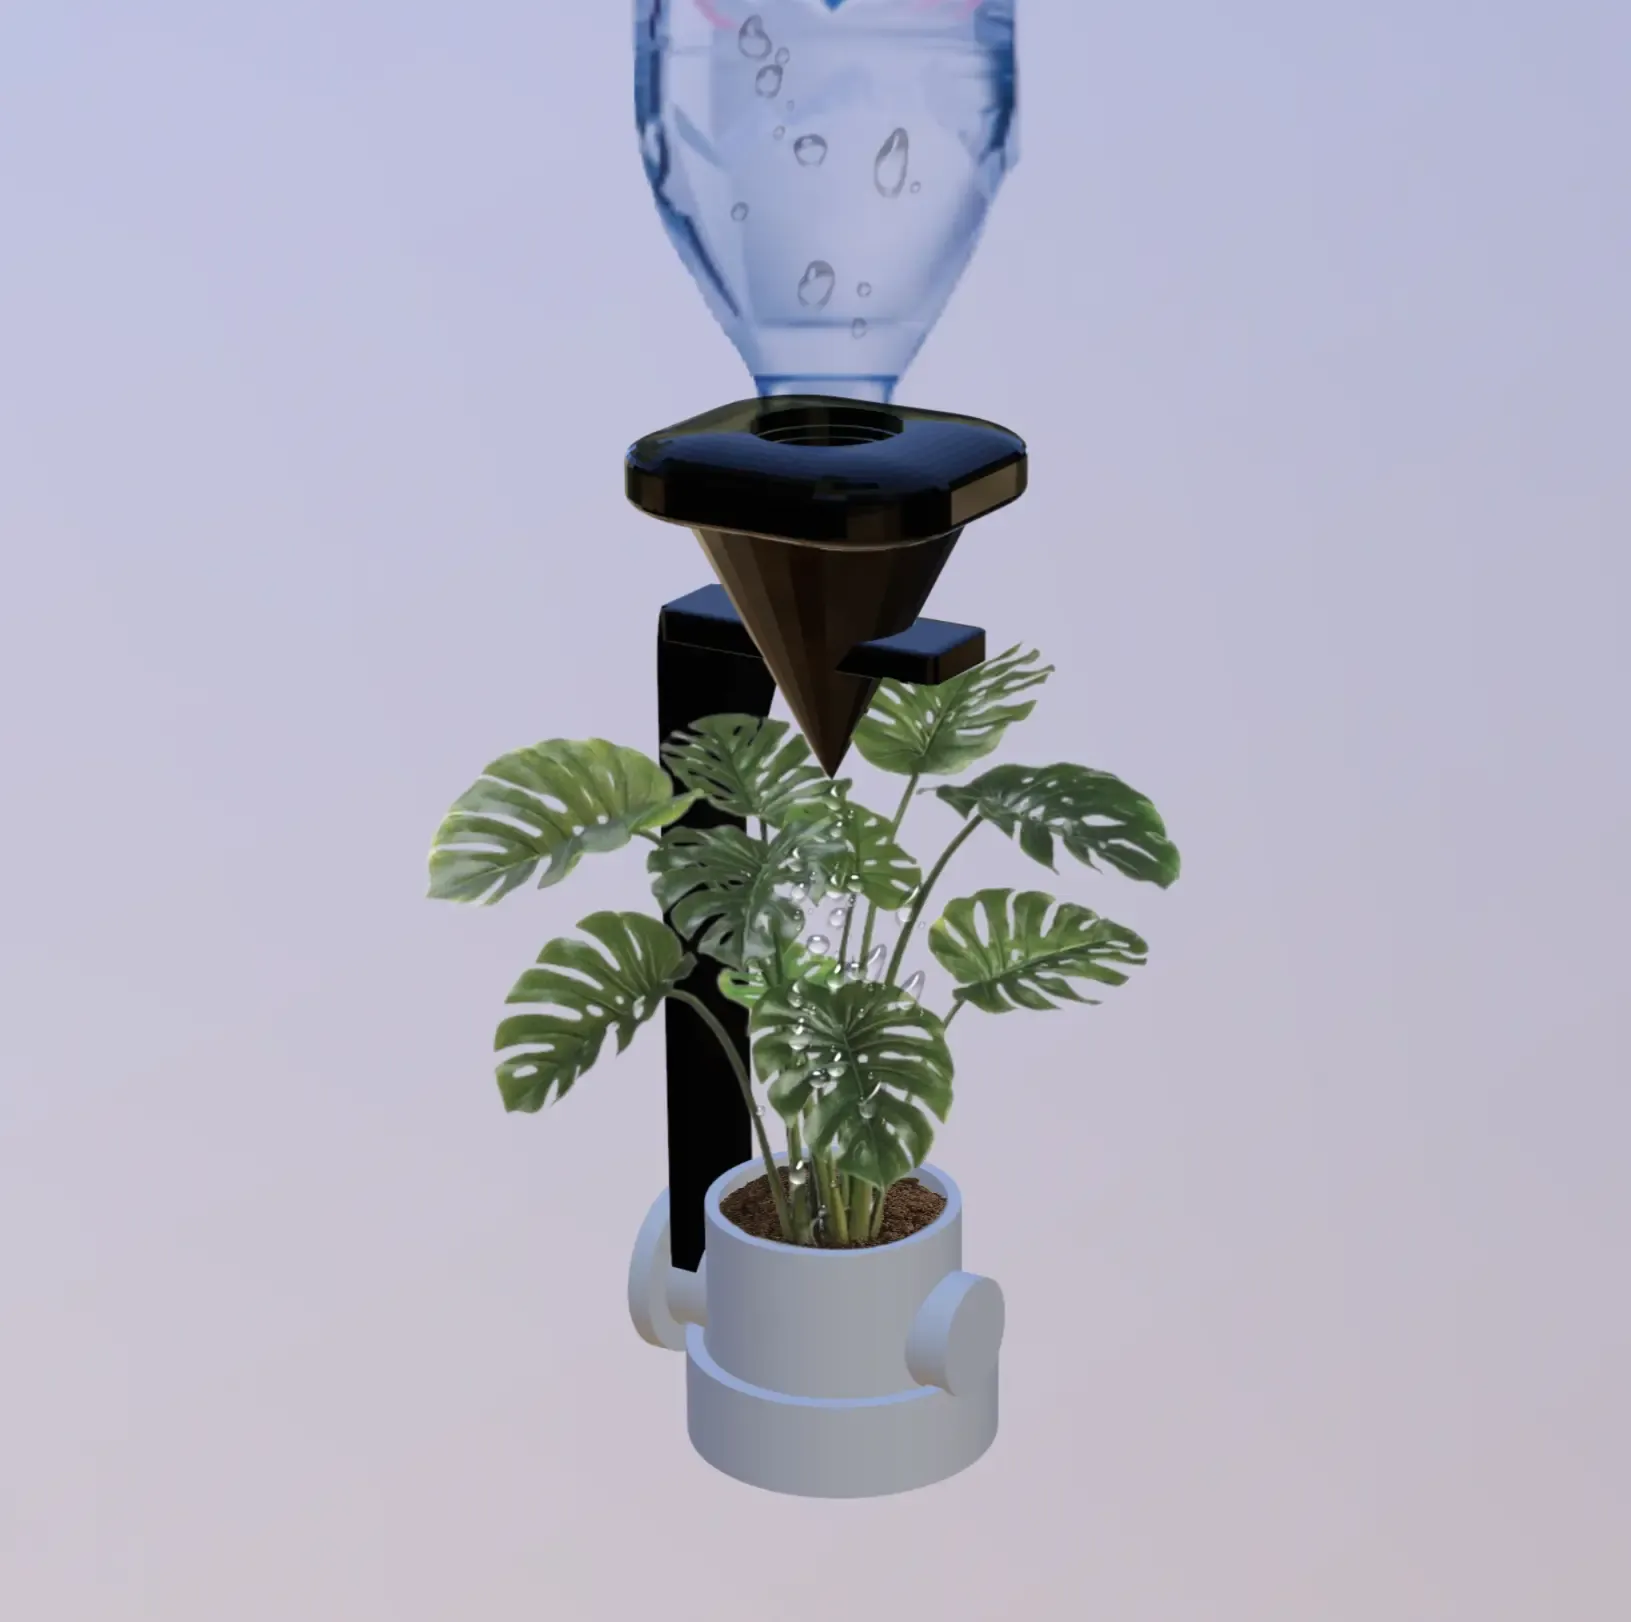 Auto-watering plant pot